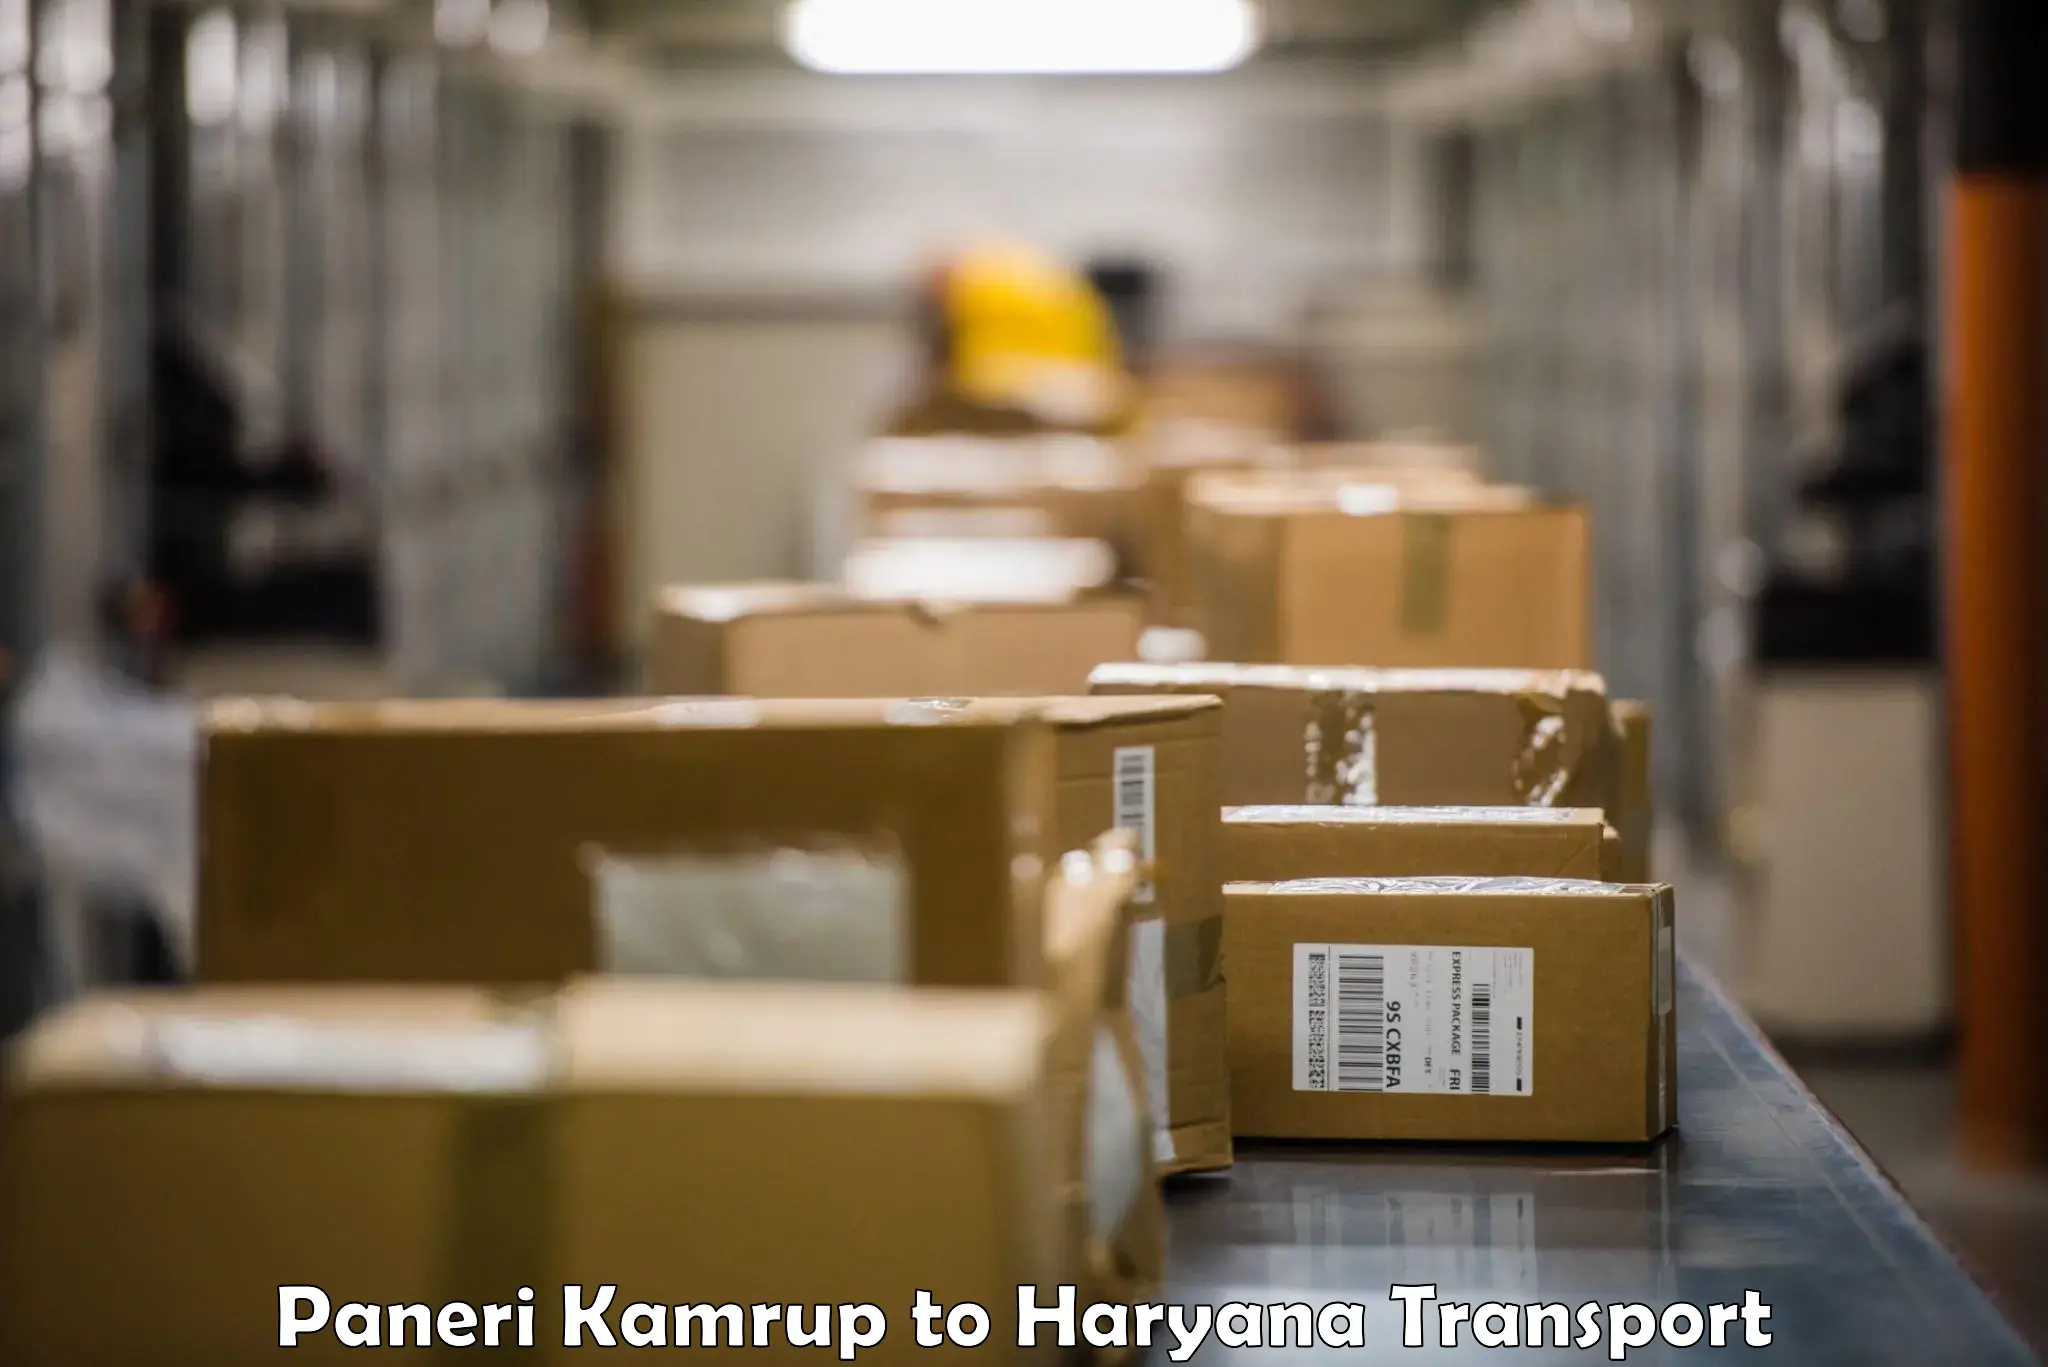 Delivery service Paneri Kamrup to Gurugram